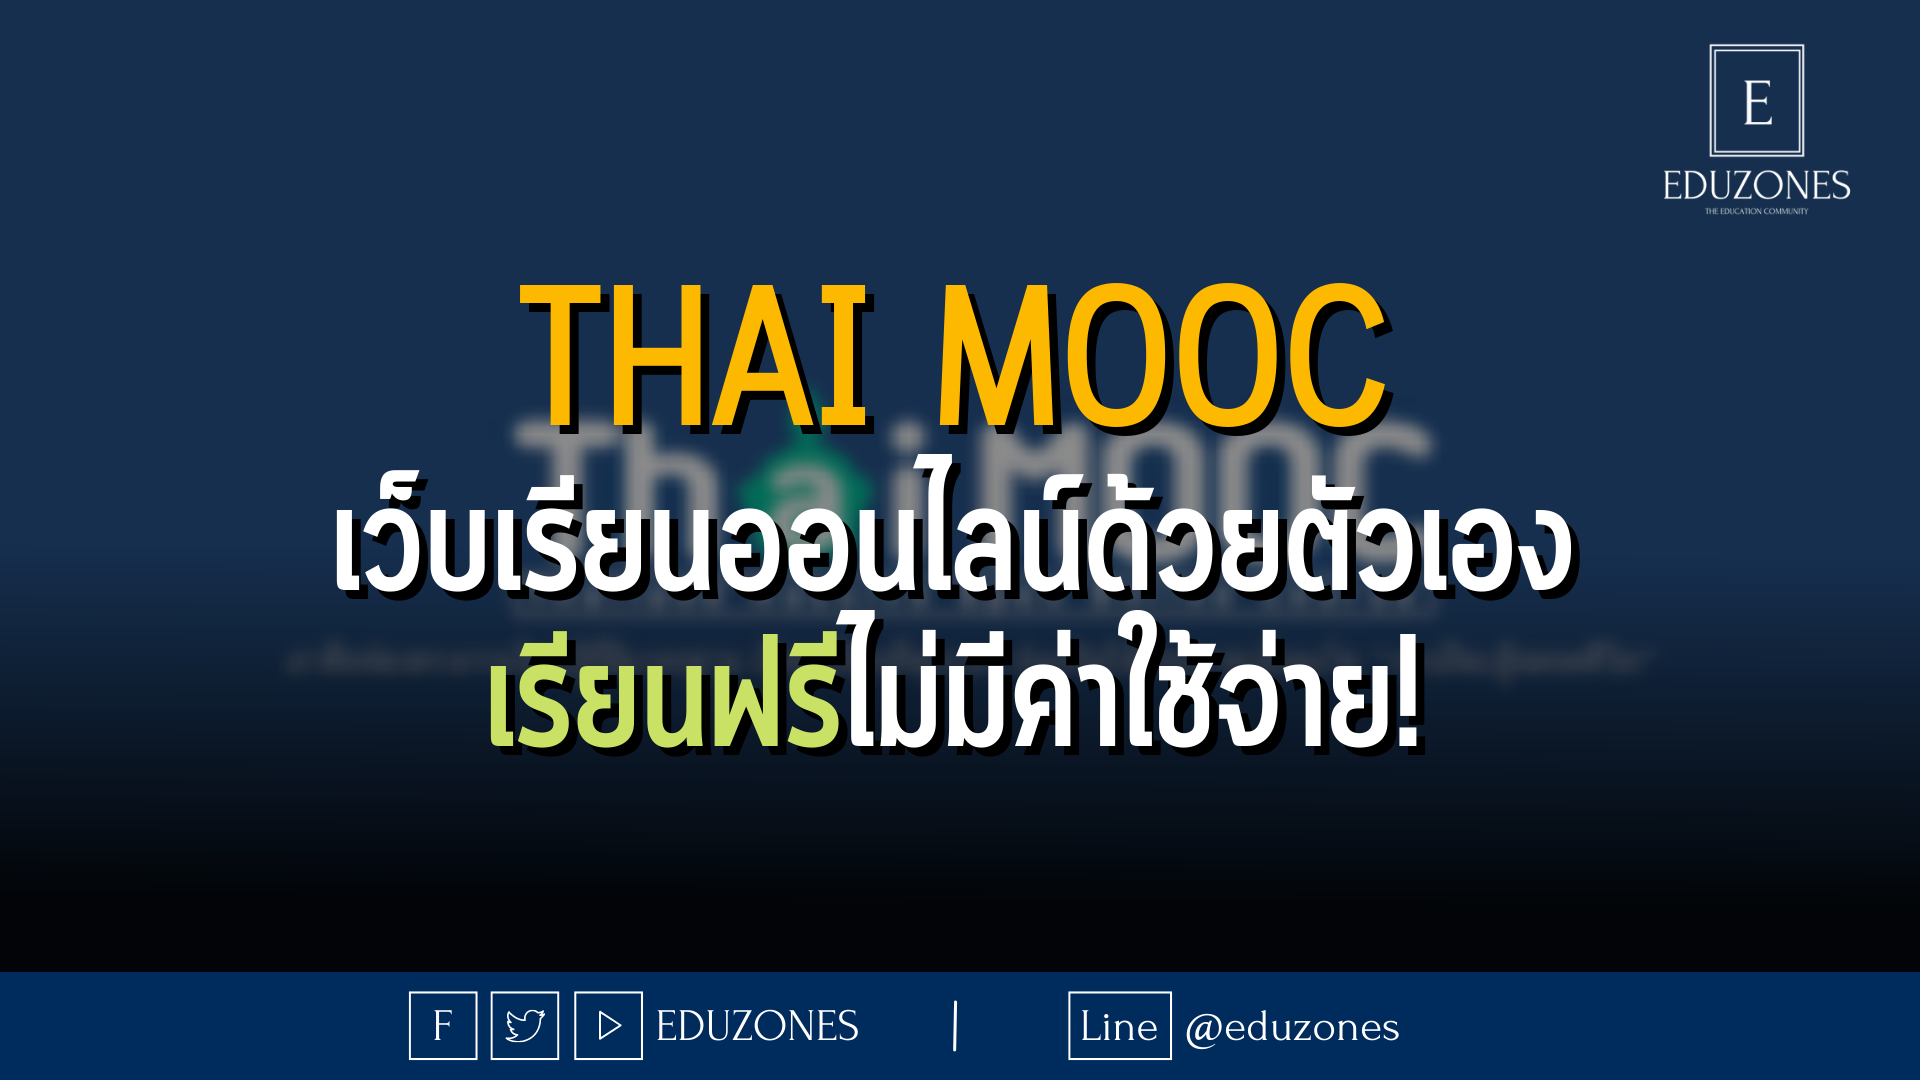 Thai MOOC เว็บเรียนออนไลน์ด้วยตัวเอง เรียนฟรีไม่มีค่าใช้จ่าย!